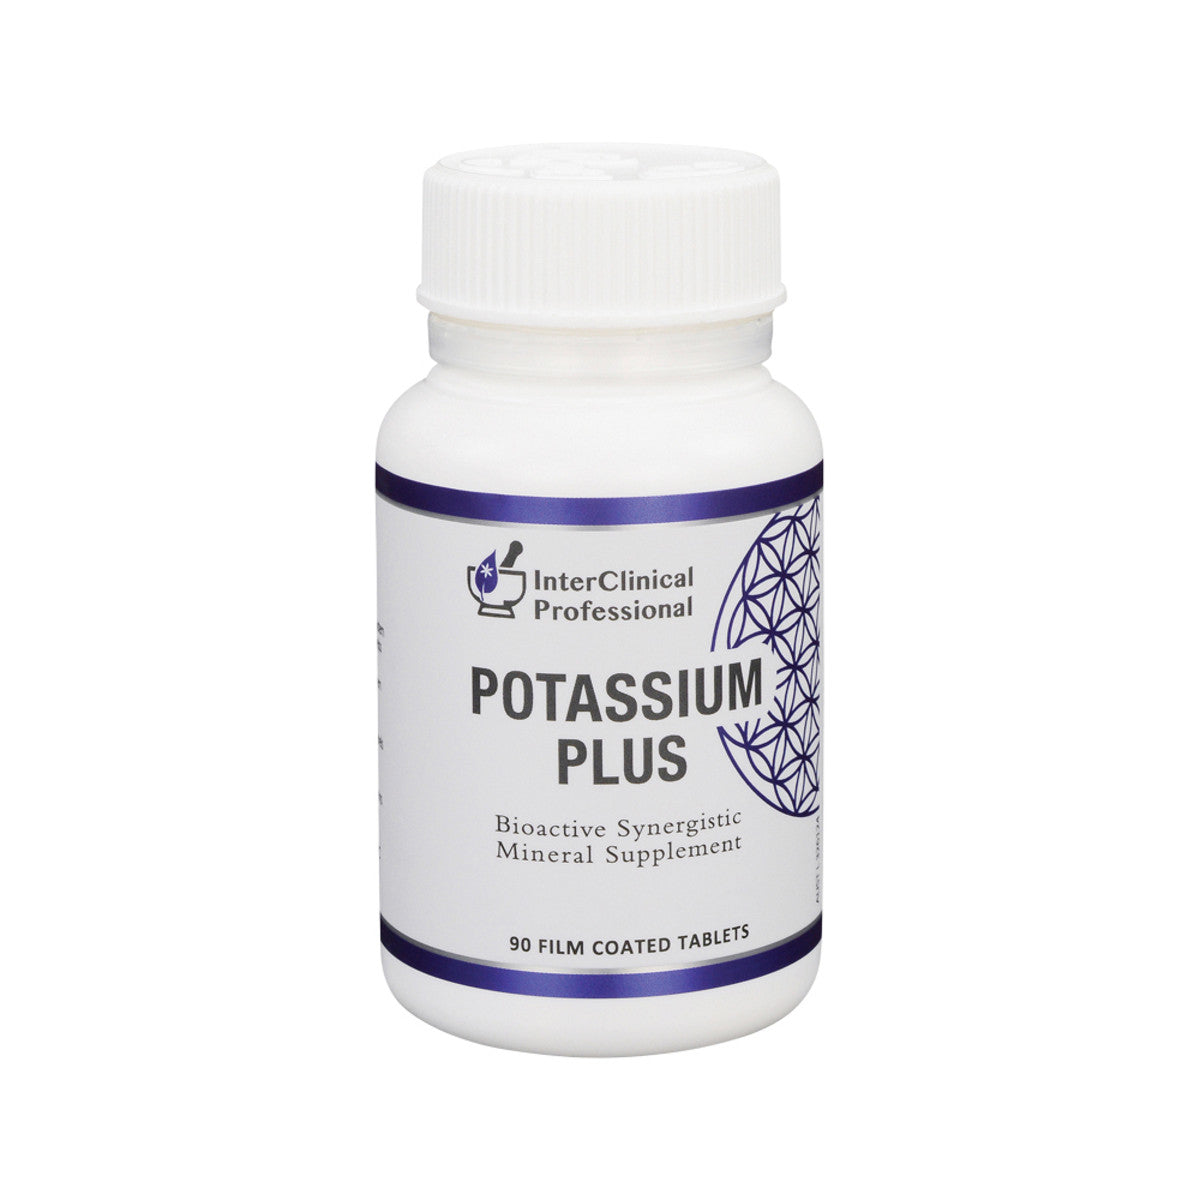 InterClinical Professional Potassium Plus